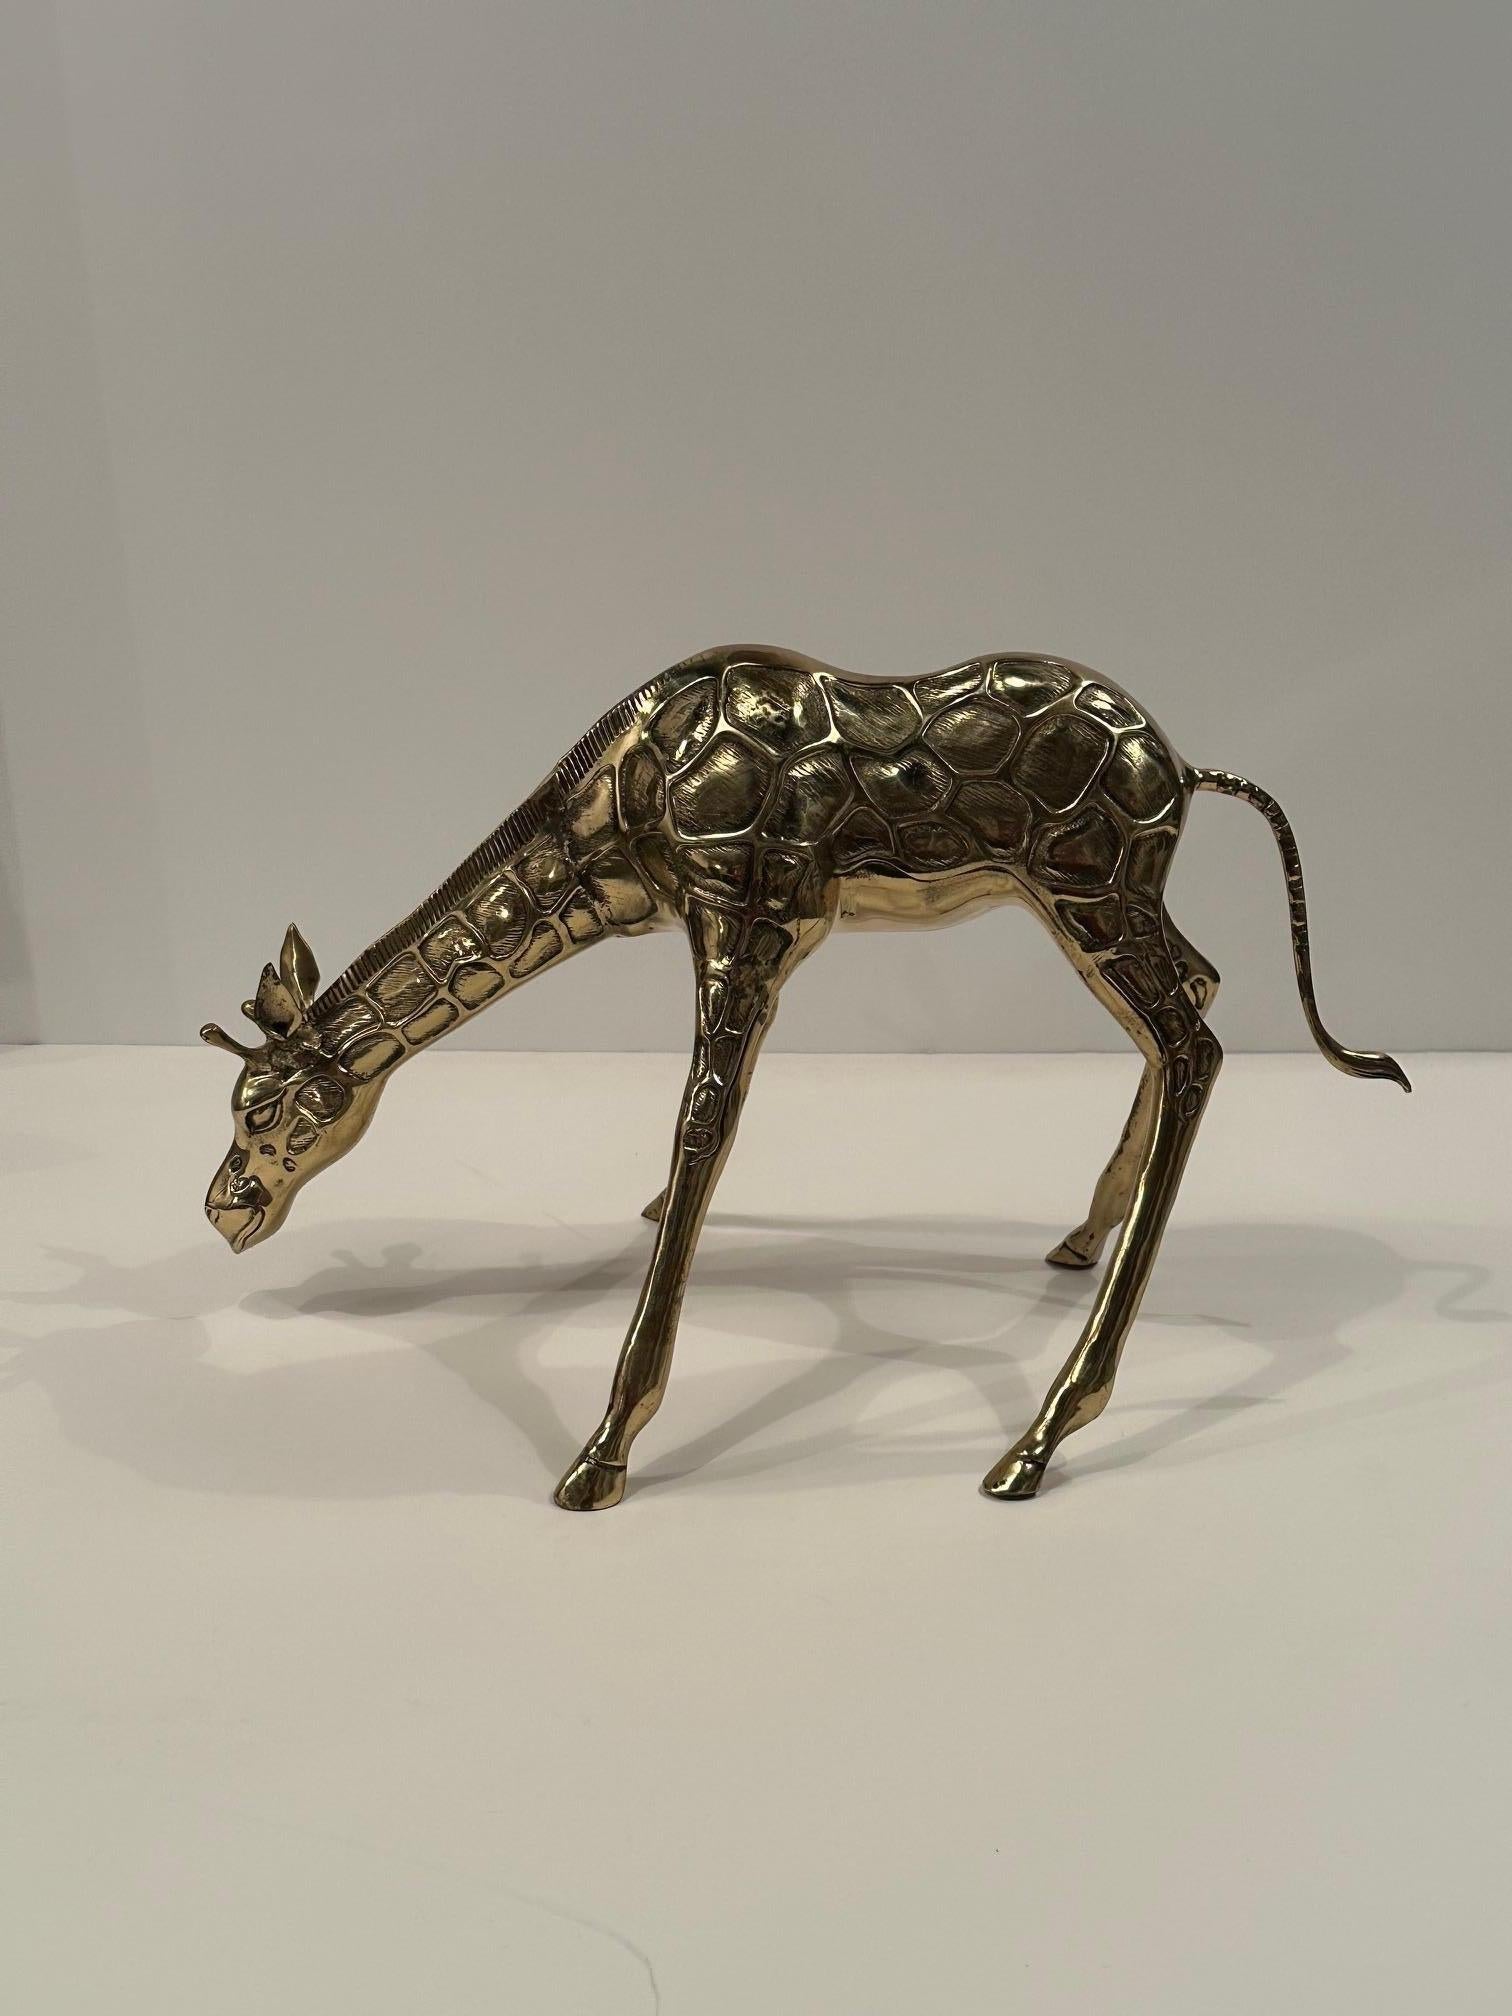 Korean Nicely Cast Brass Giraffe Sculpture For Sale